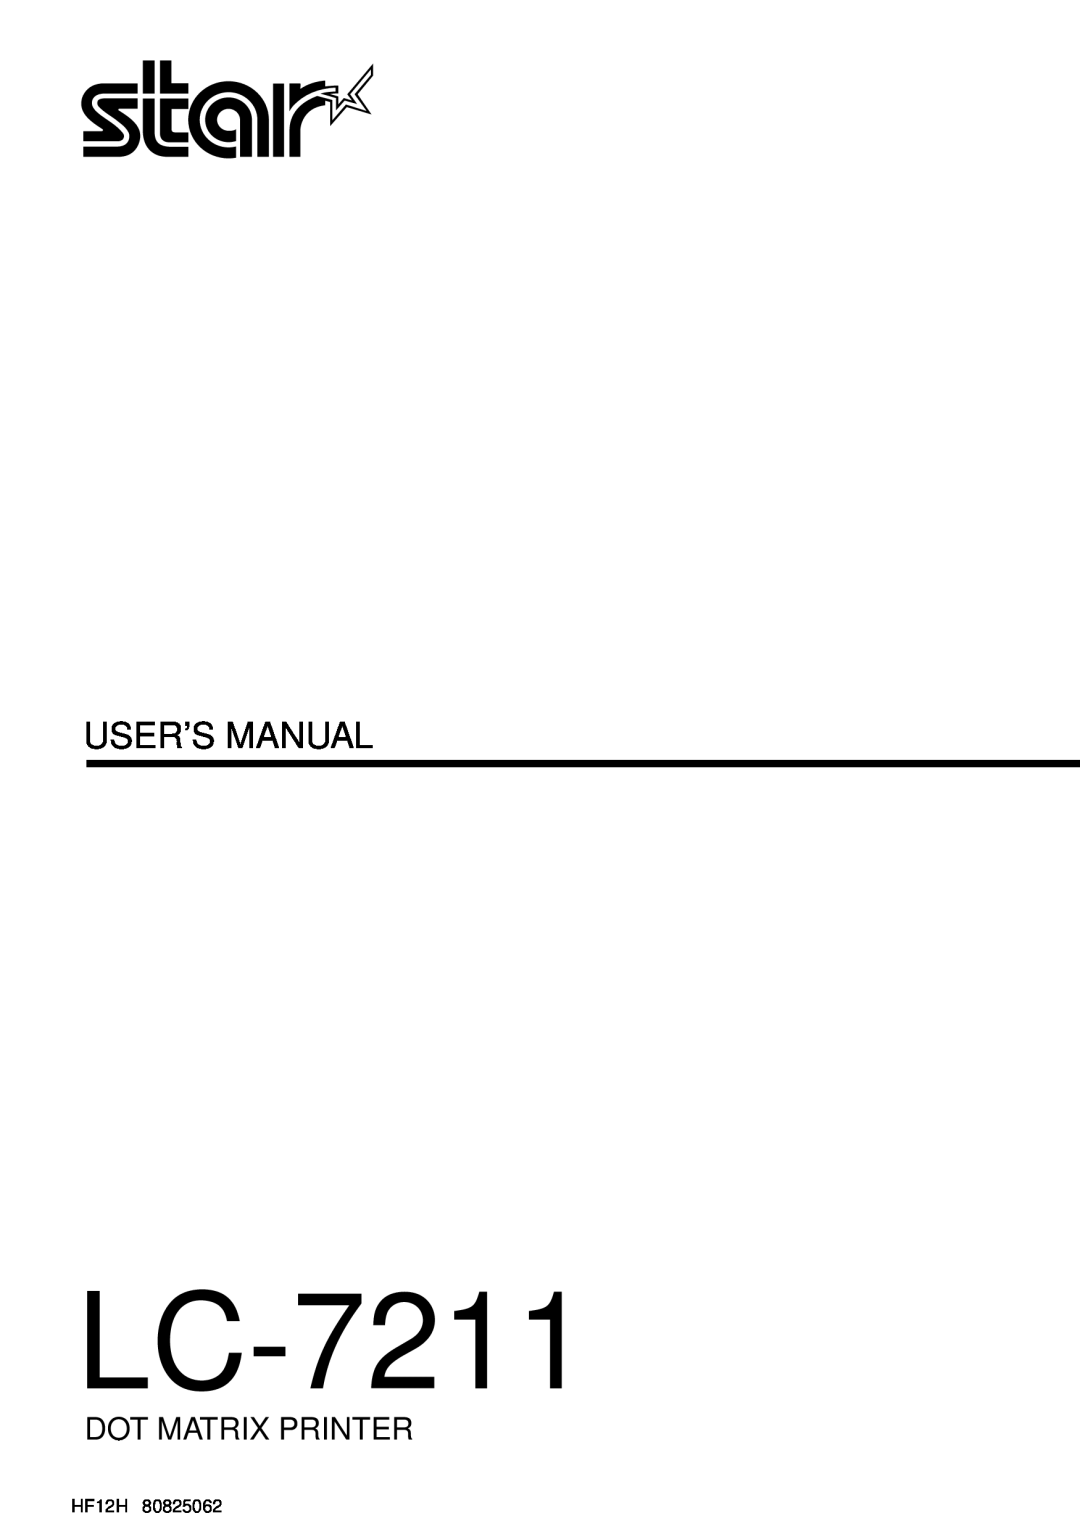 Star Micronics LC-7211 user manual User’S Manual, Dot Matrix Printer 